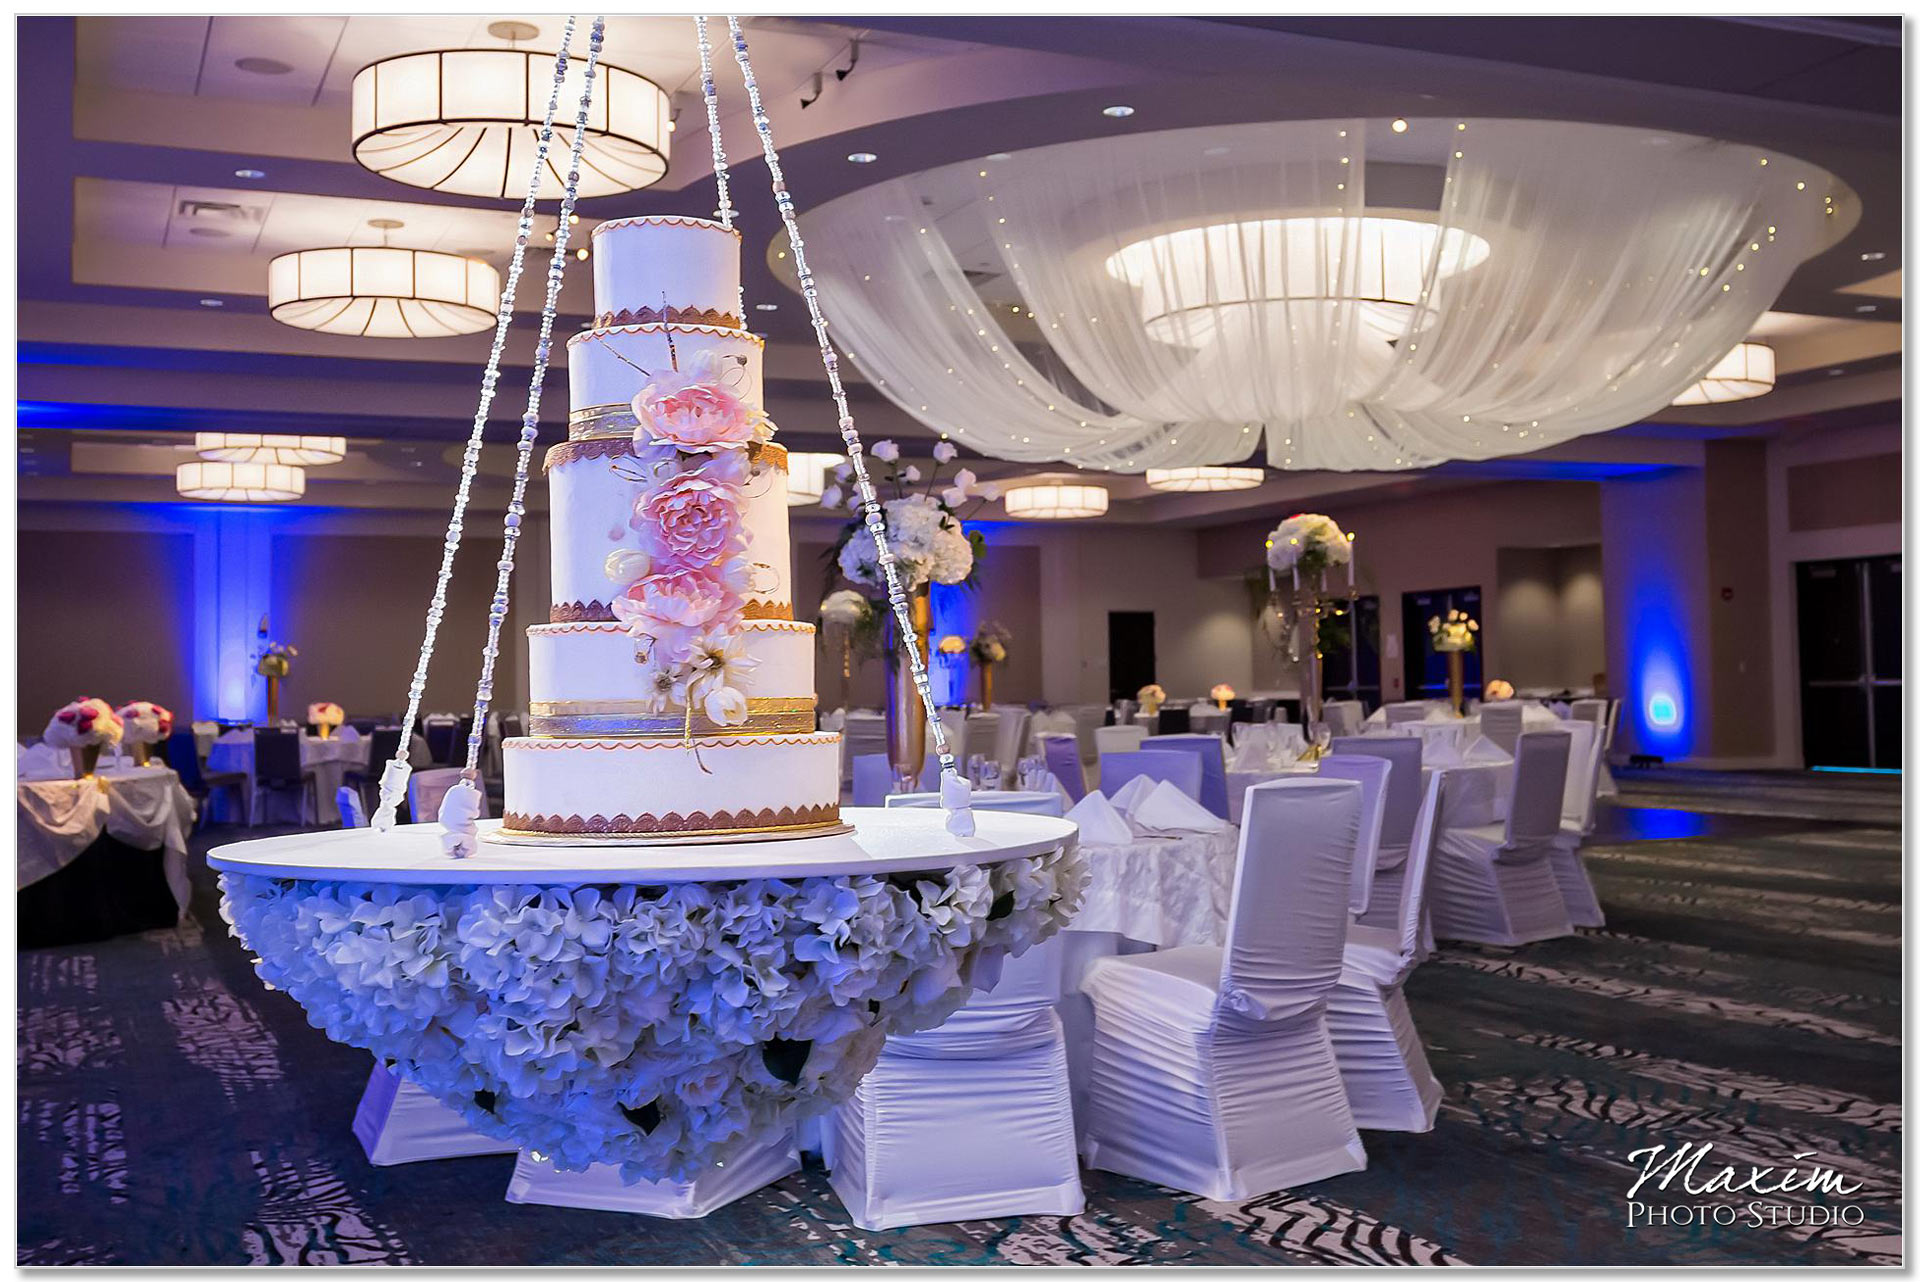 Centre Park West Holiday Inn Wedding Decor reception Cake